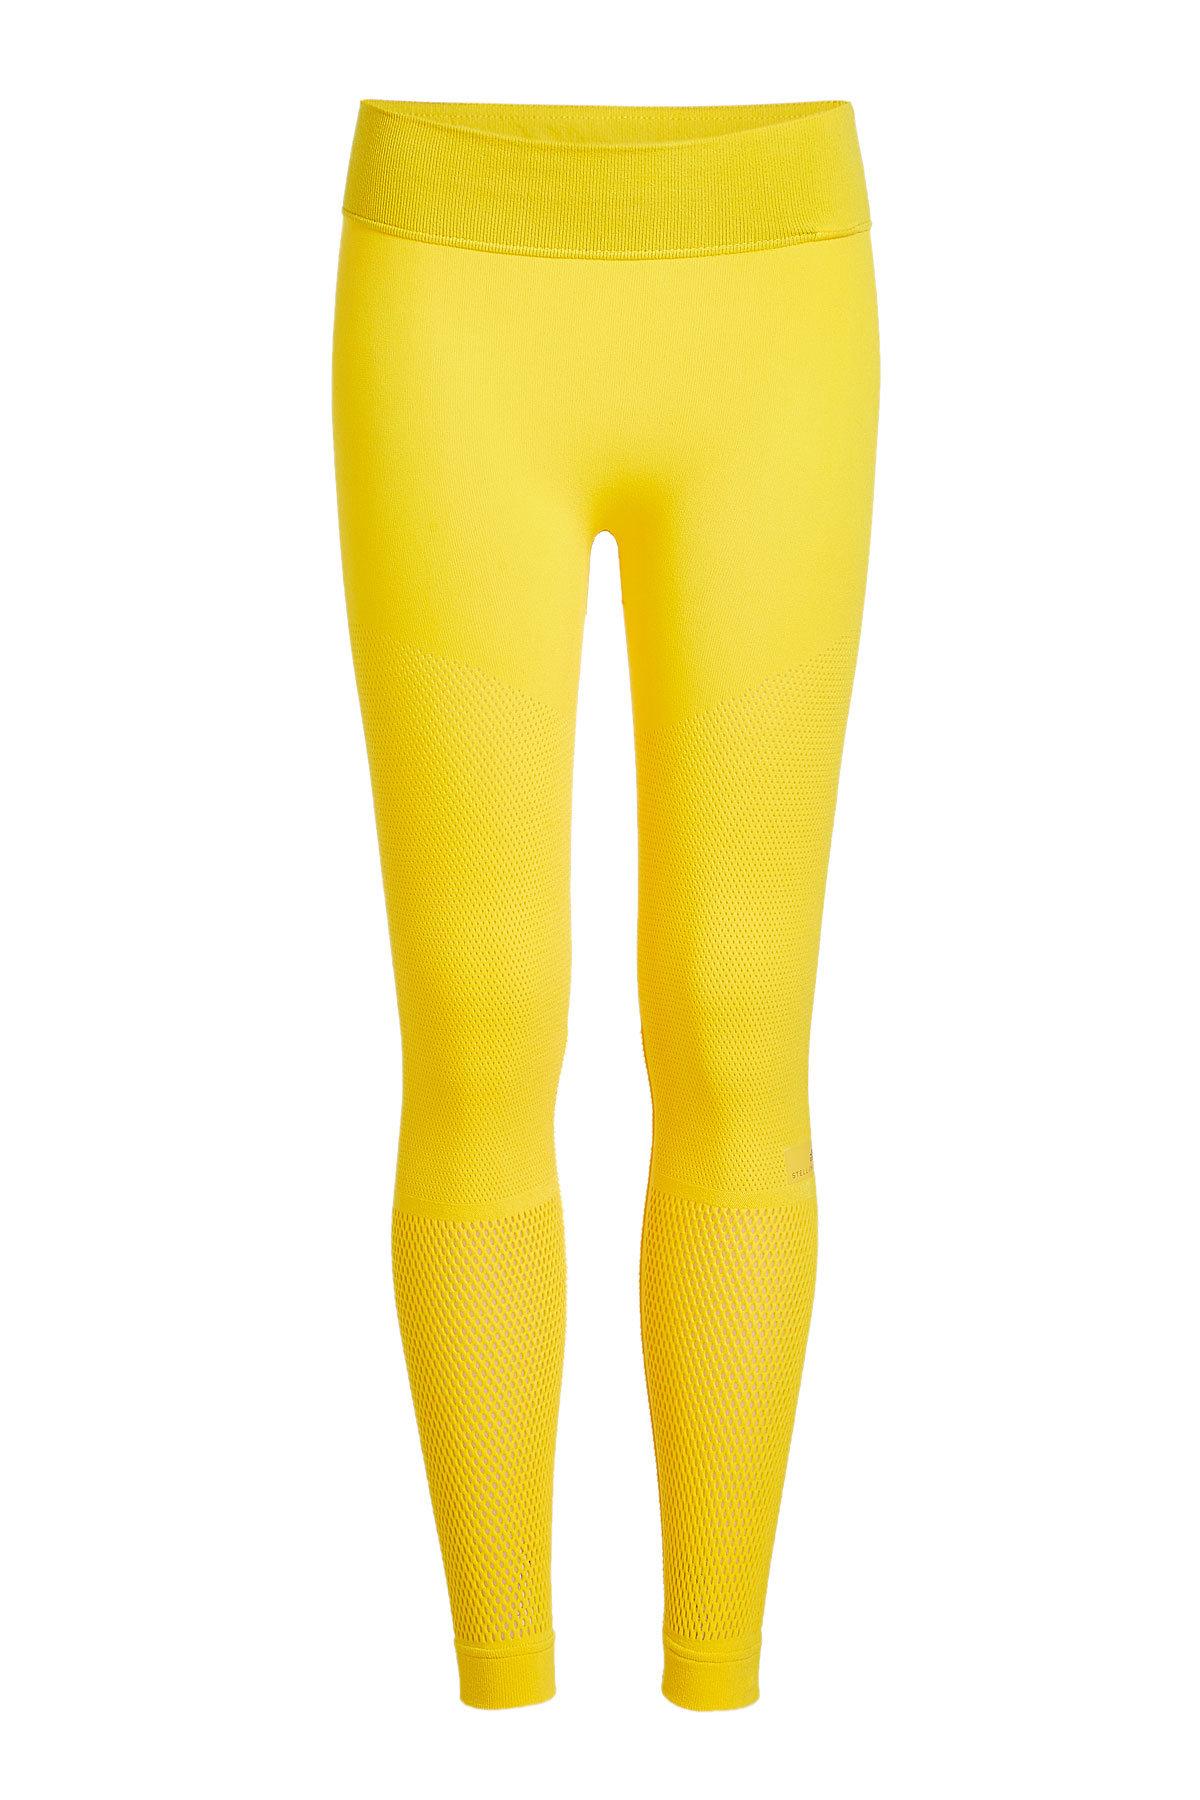 yellow adidas leggings